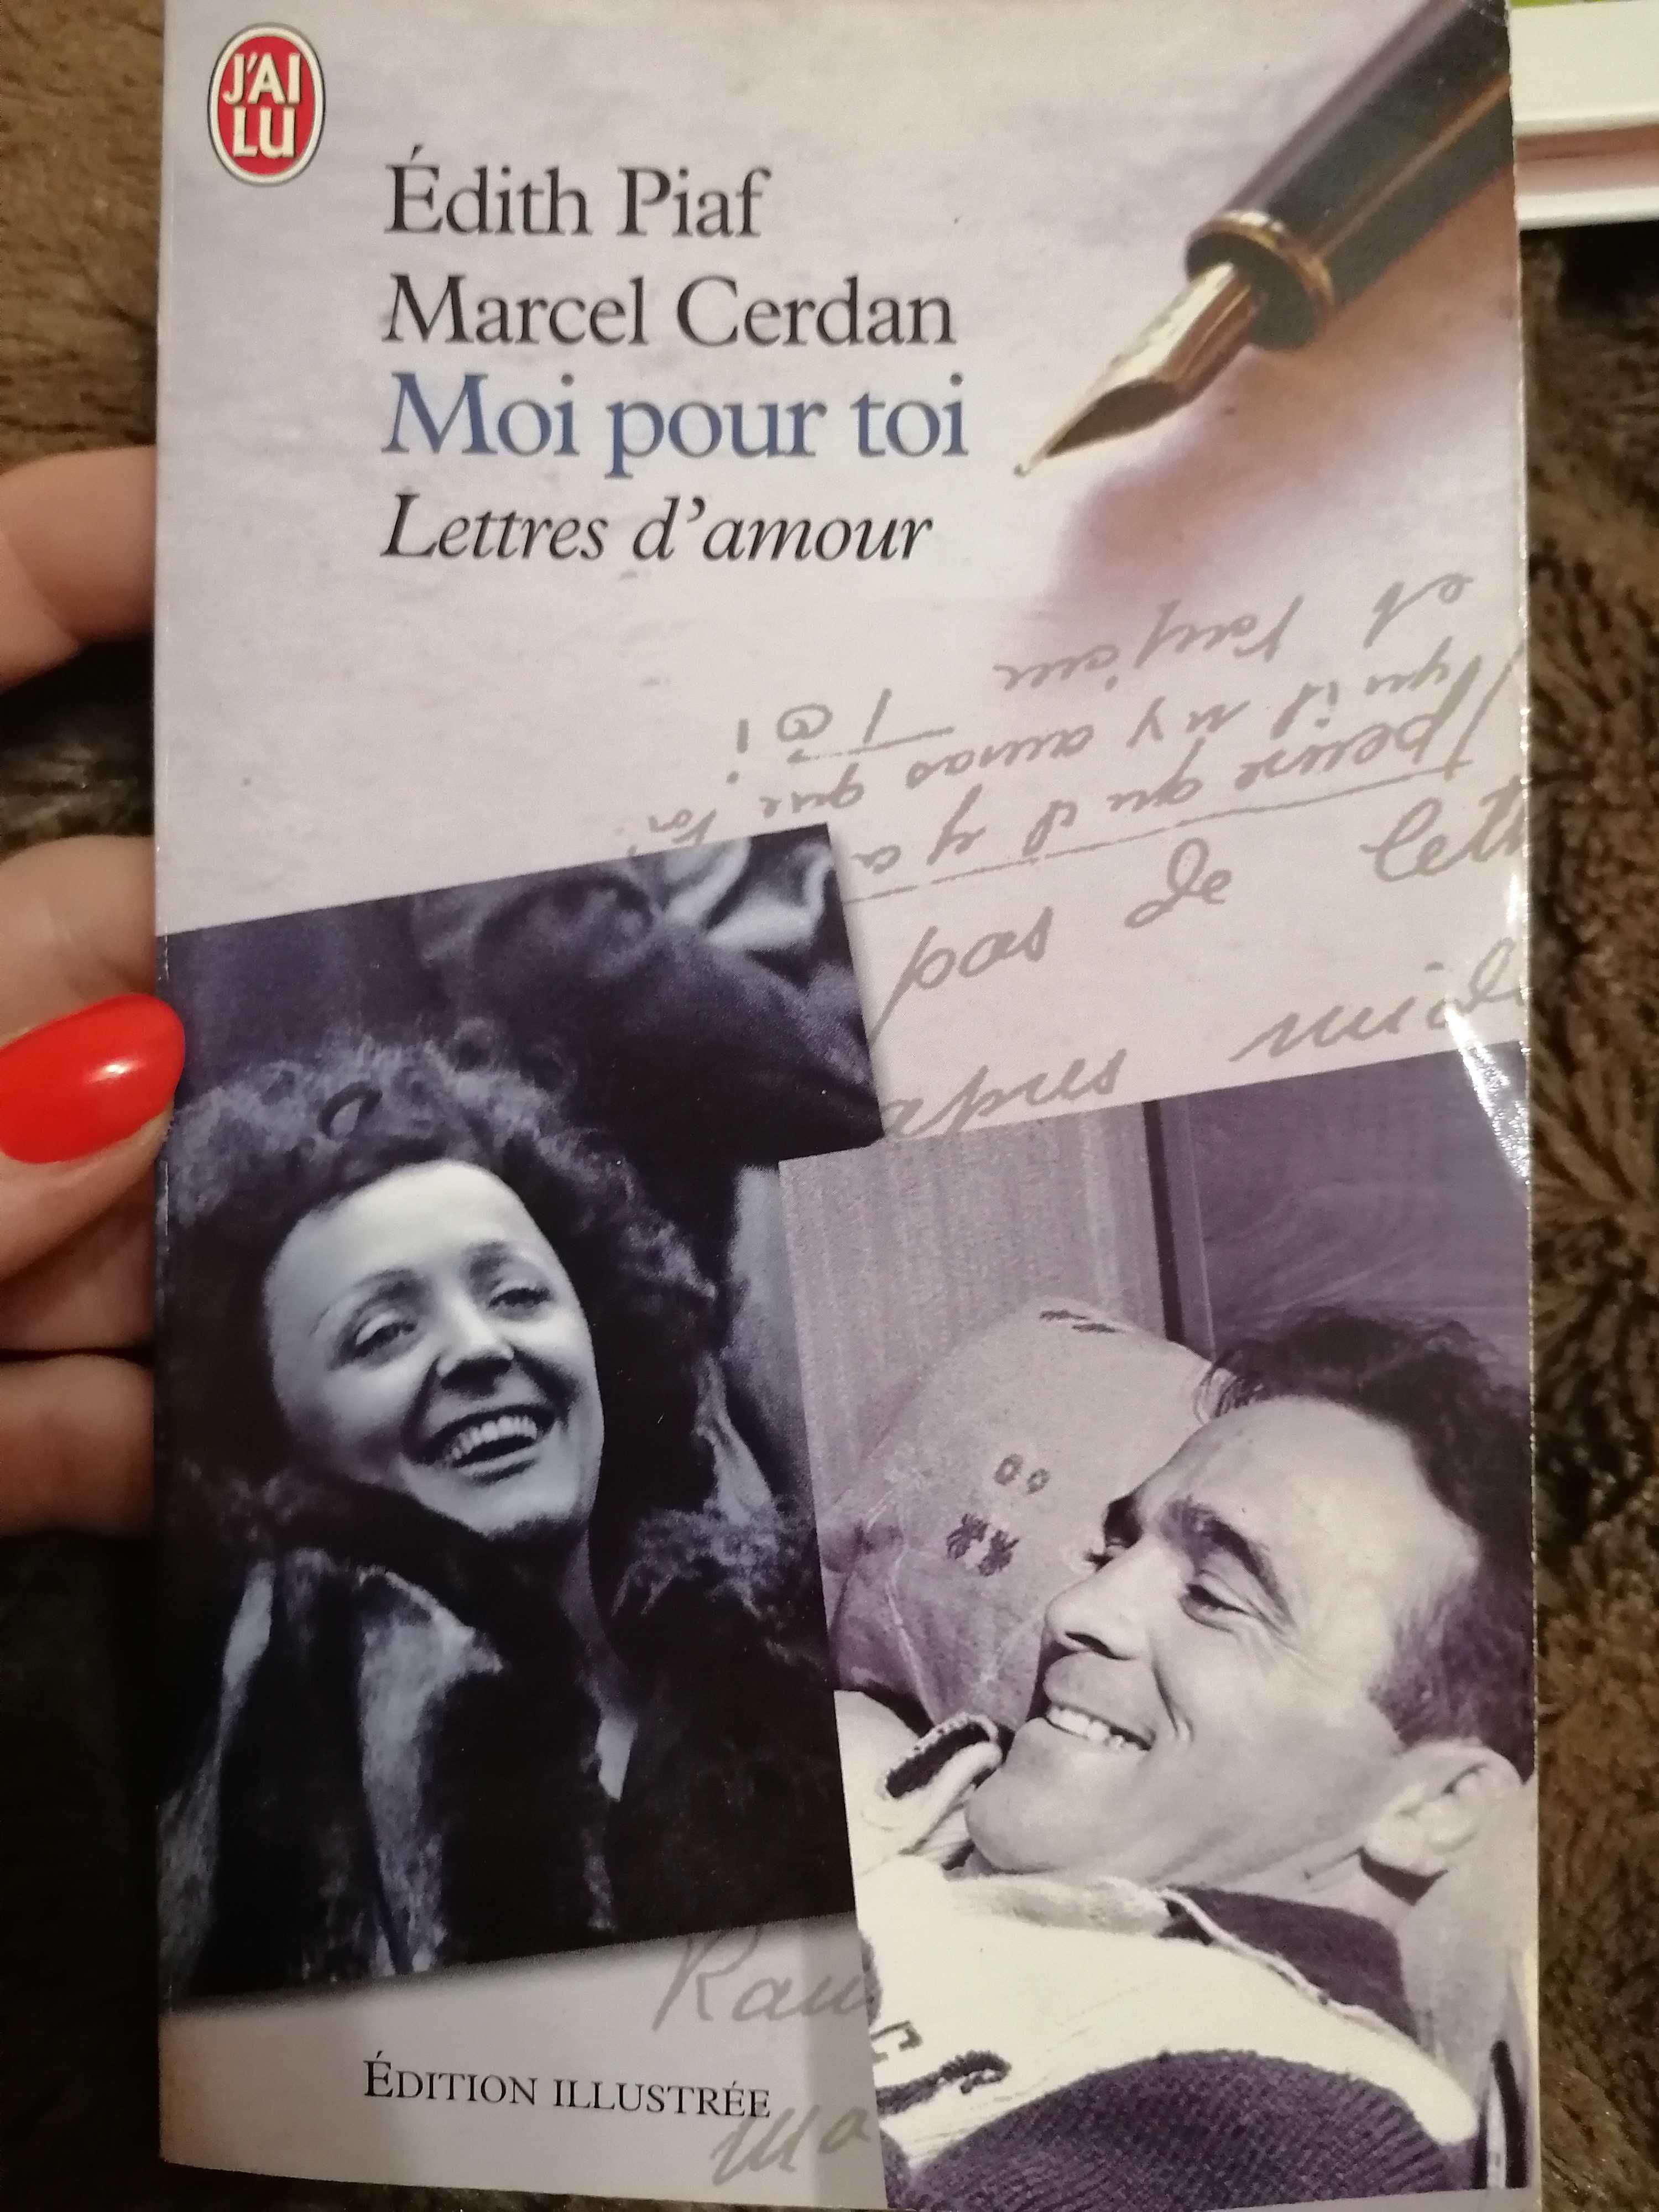 Moi pour toi Edith Piaf, Marcel Cerdan